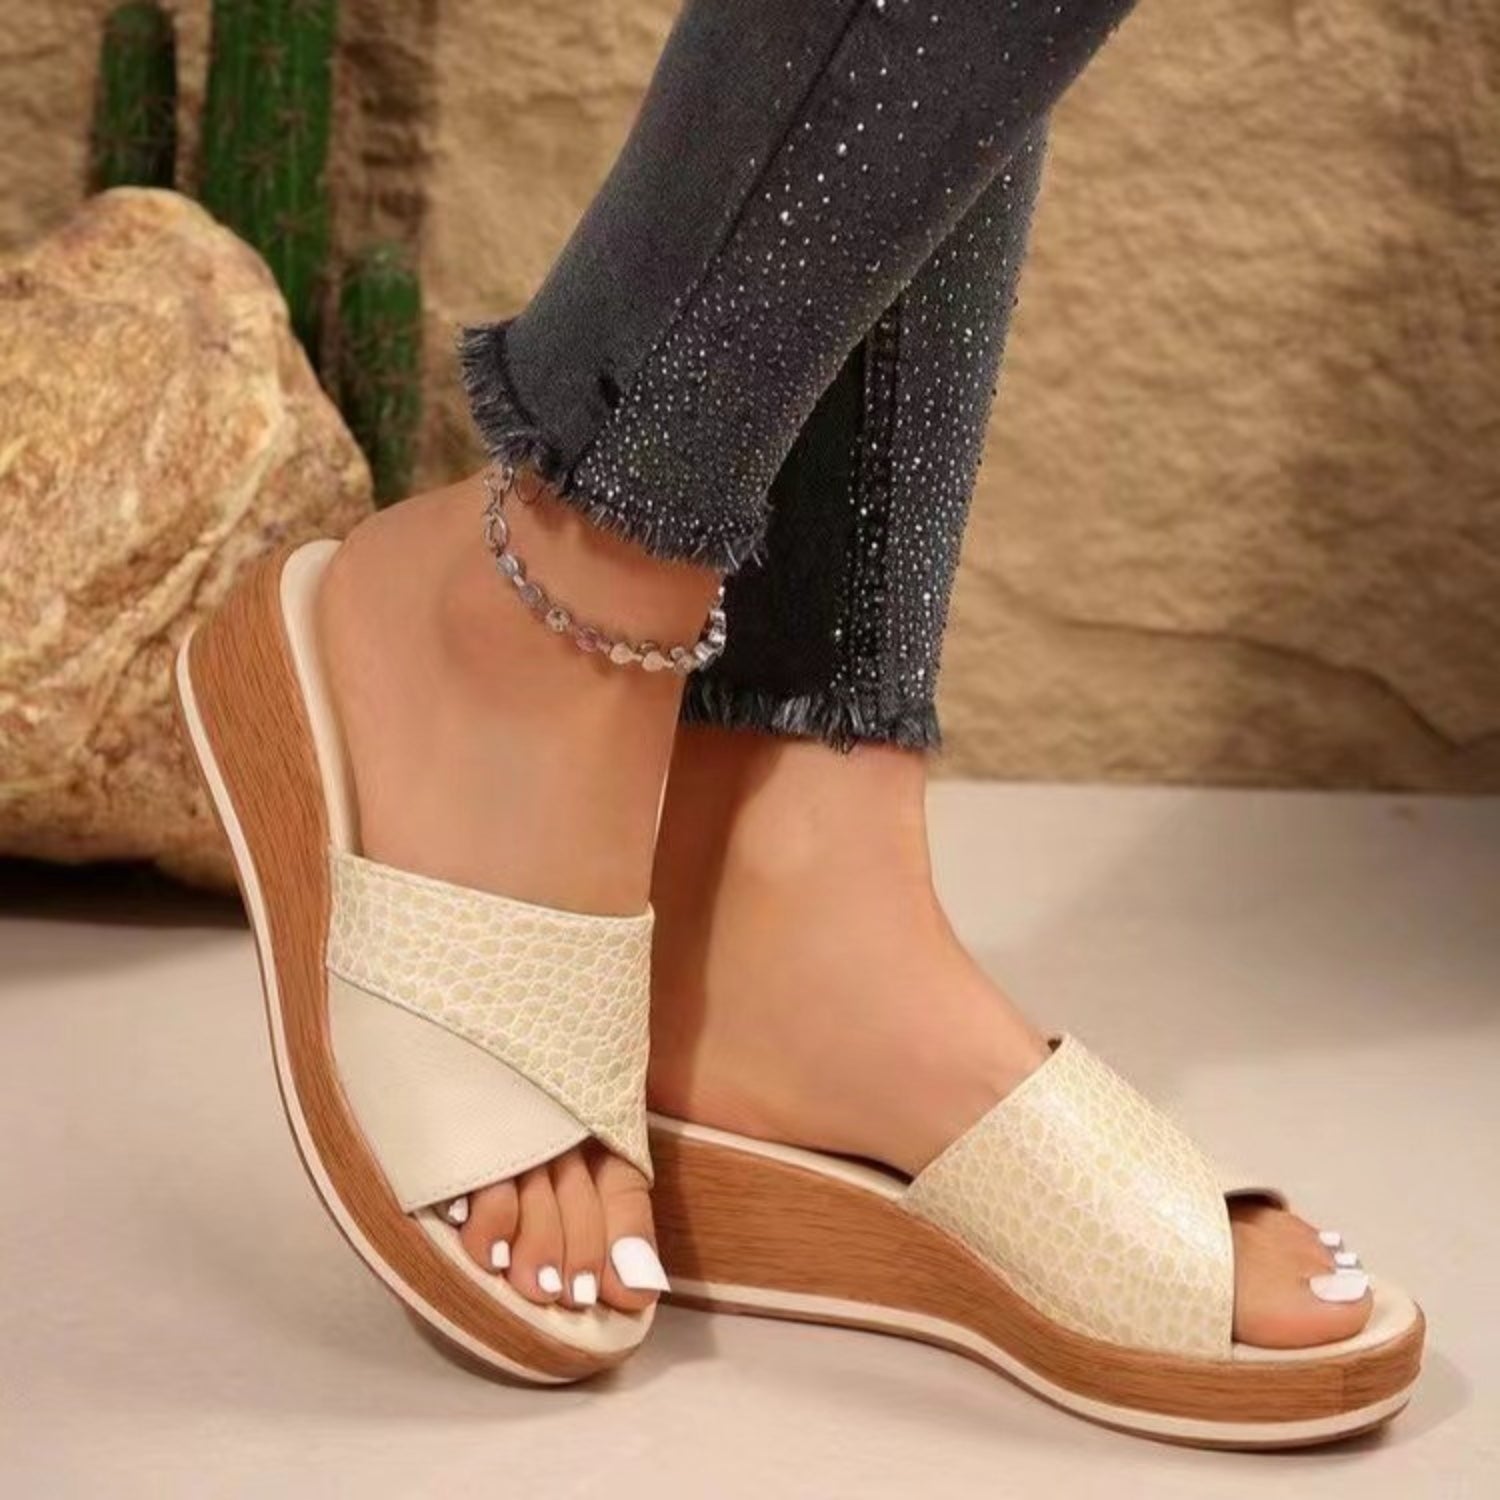 TEEK - PU Leather Open Toe Sandals SHOES TEEK Trend   